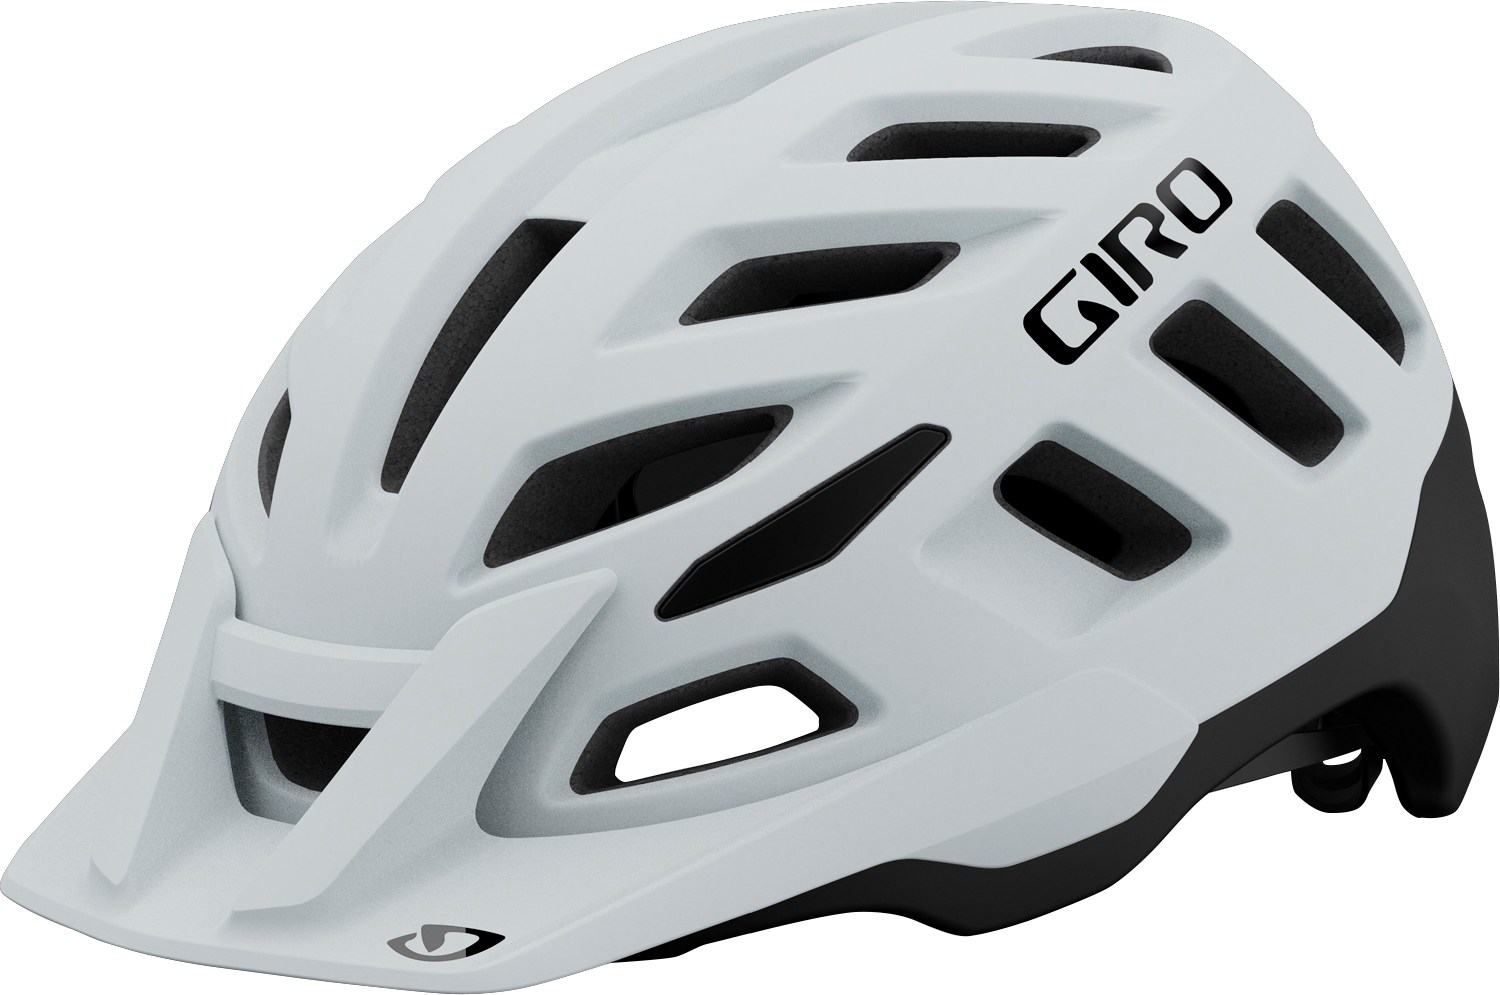 Велосипедный шлем Radix MIPS Giro, белый pseudostellariae radix taizishen powder